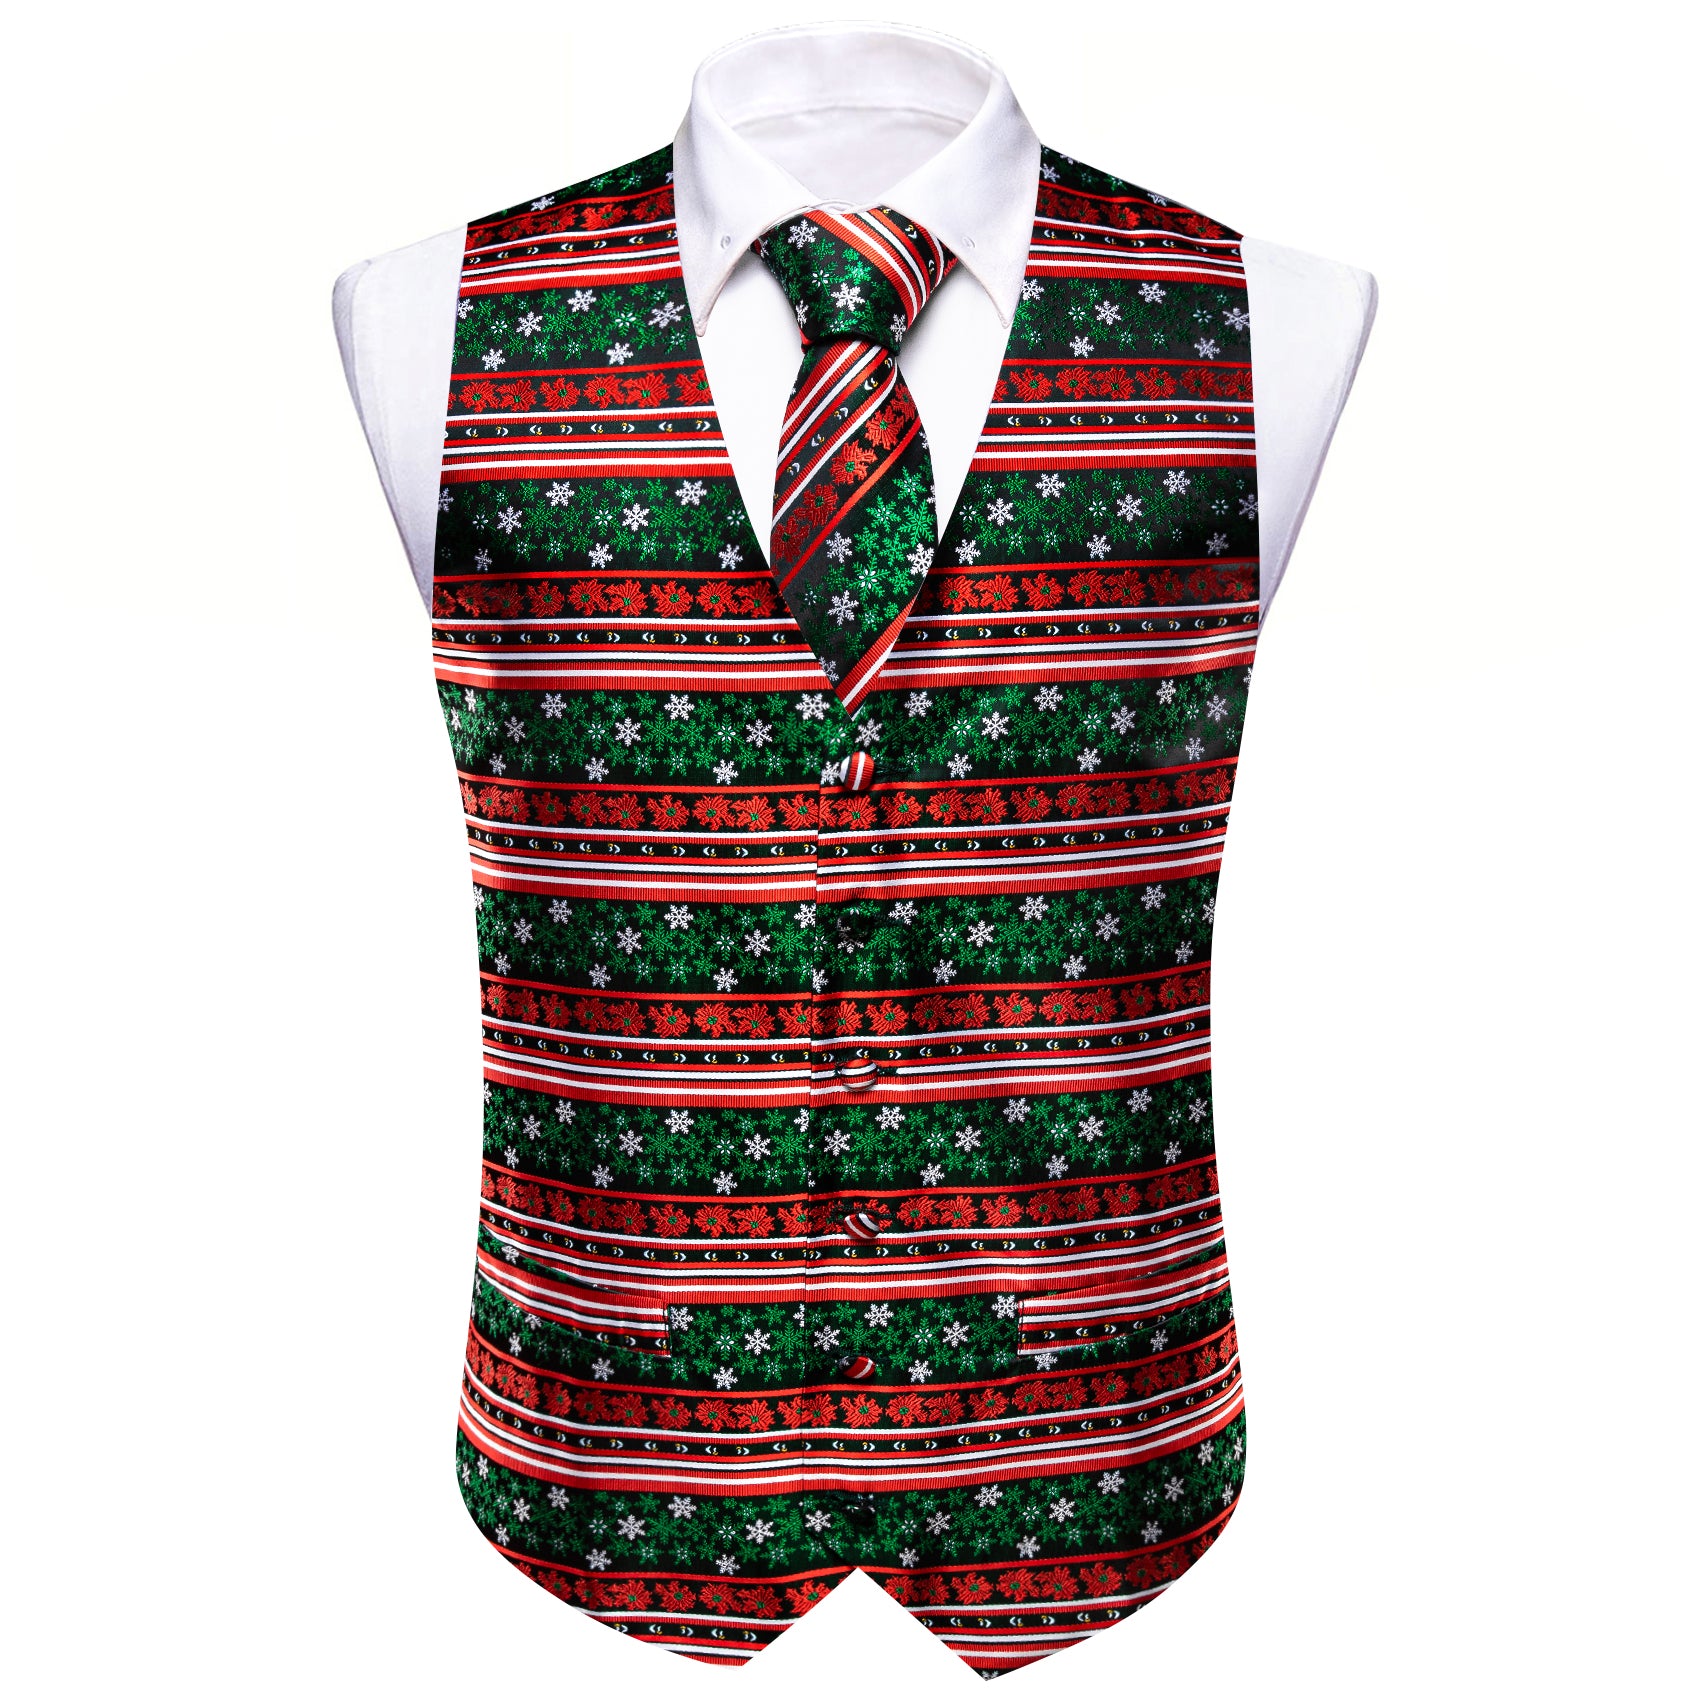 Barry.wang Men's Vest Red Green Christmas Element Silk Tie Vest Set